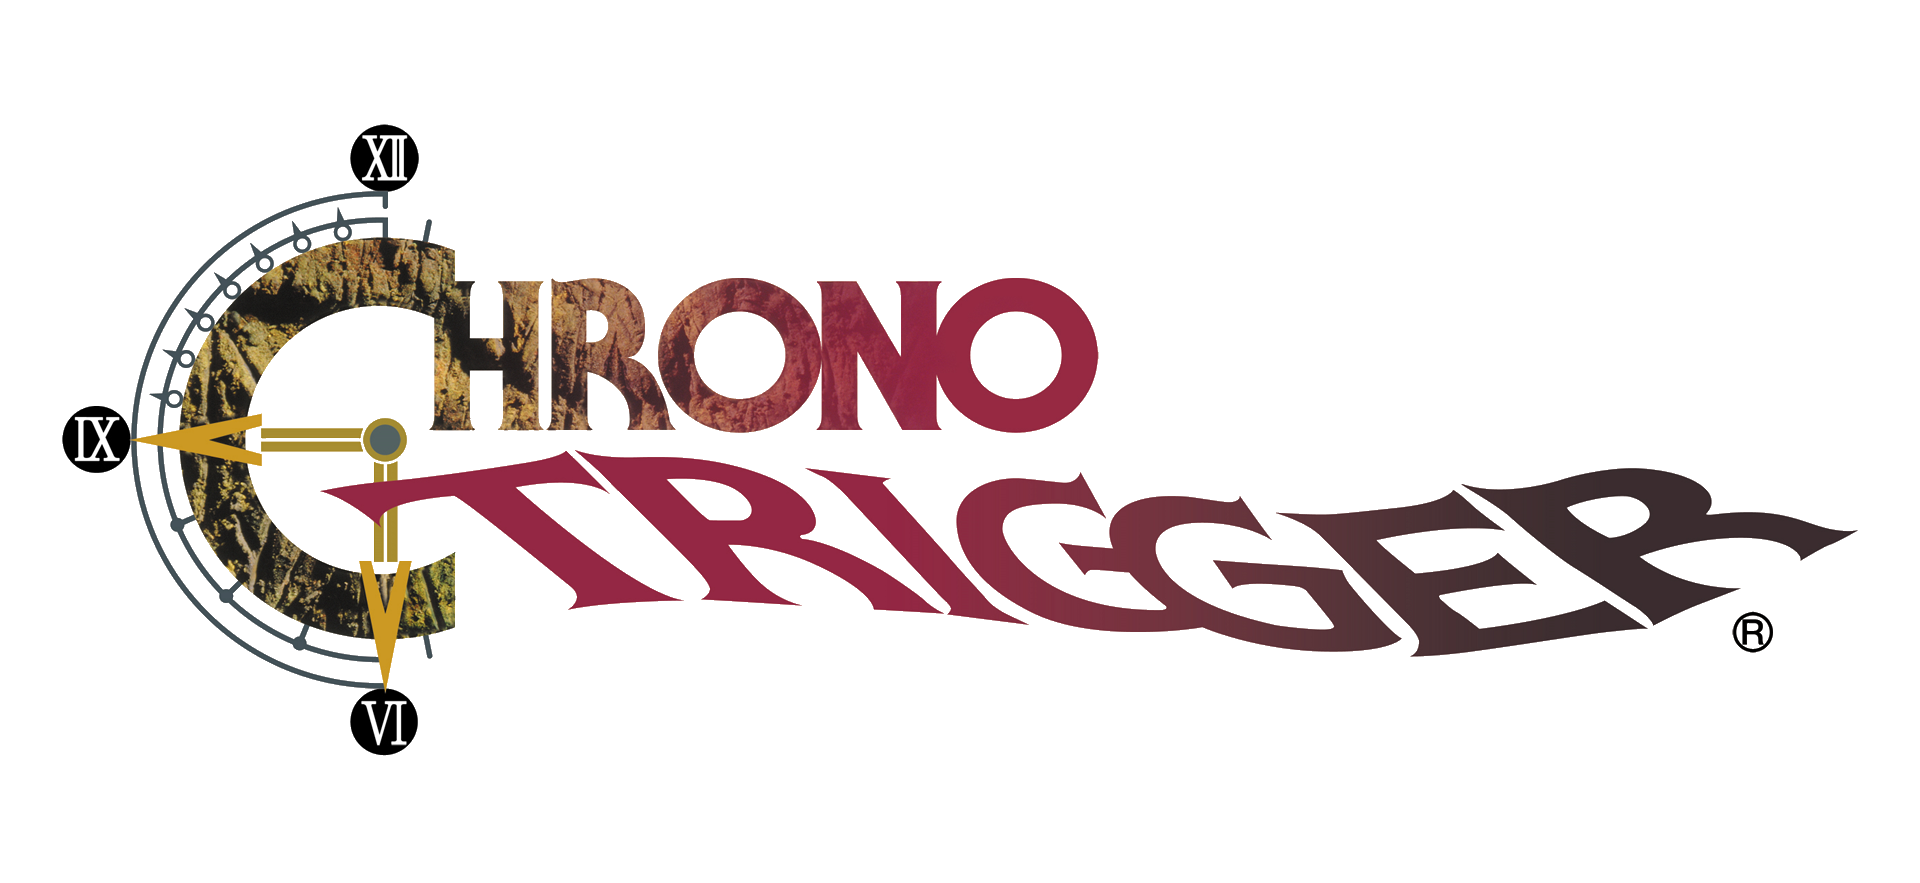 Chrono Trigger - Crono as he 